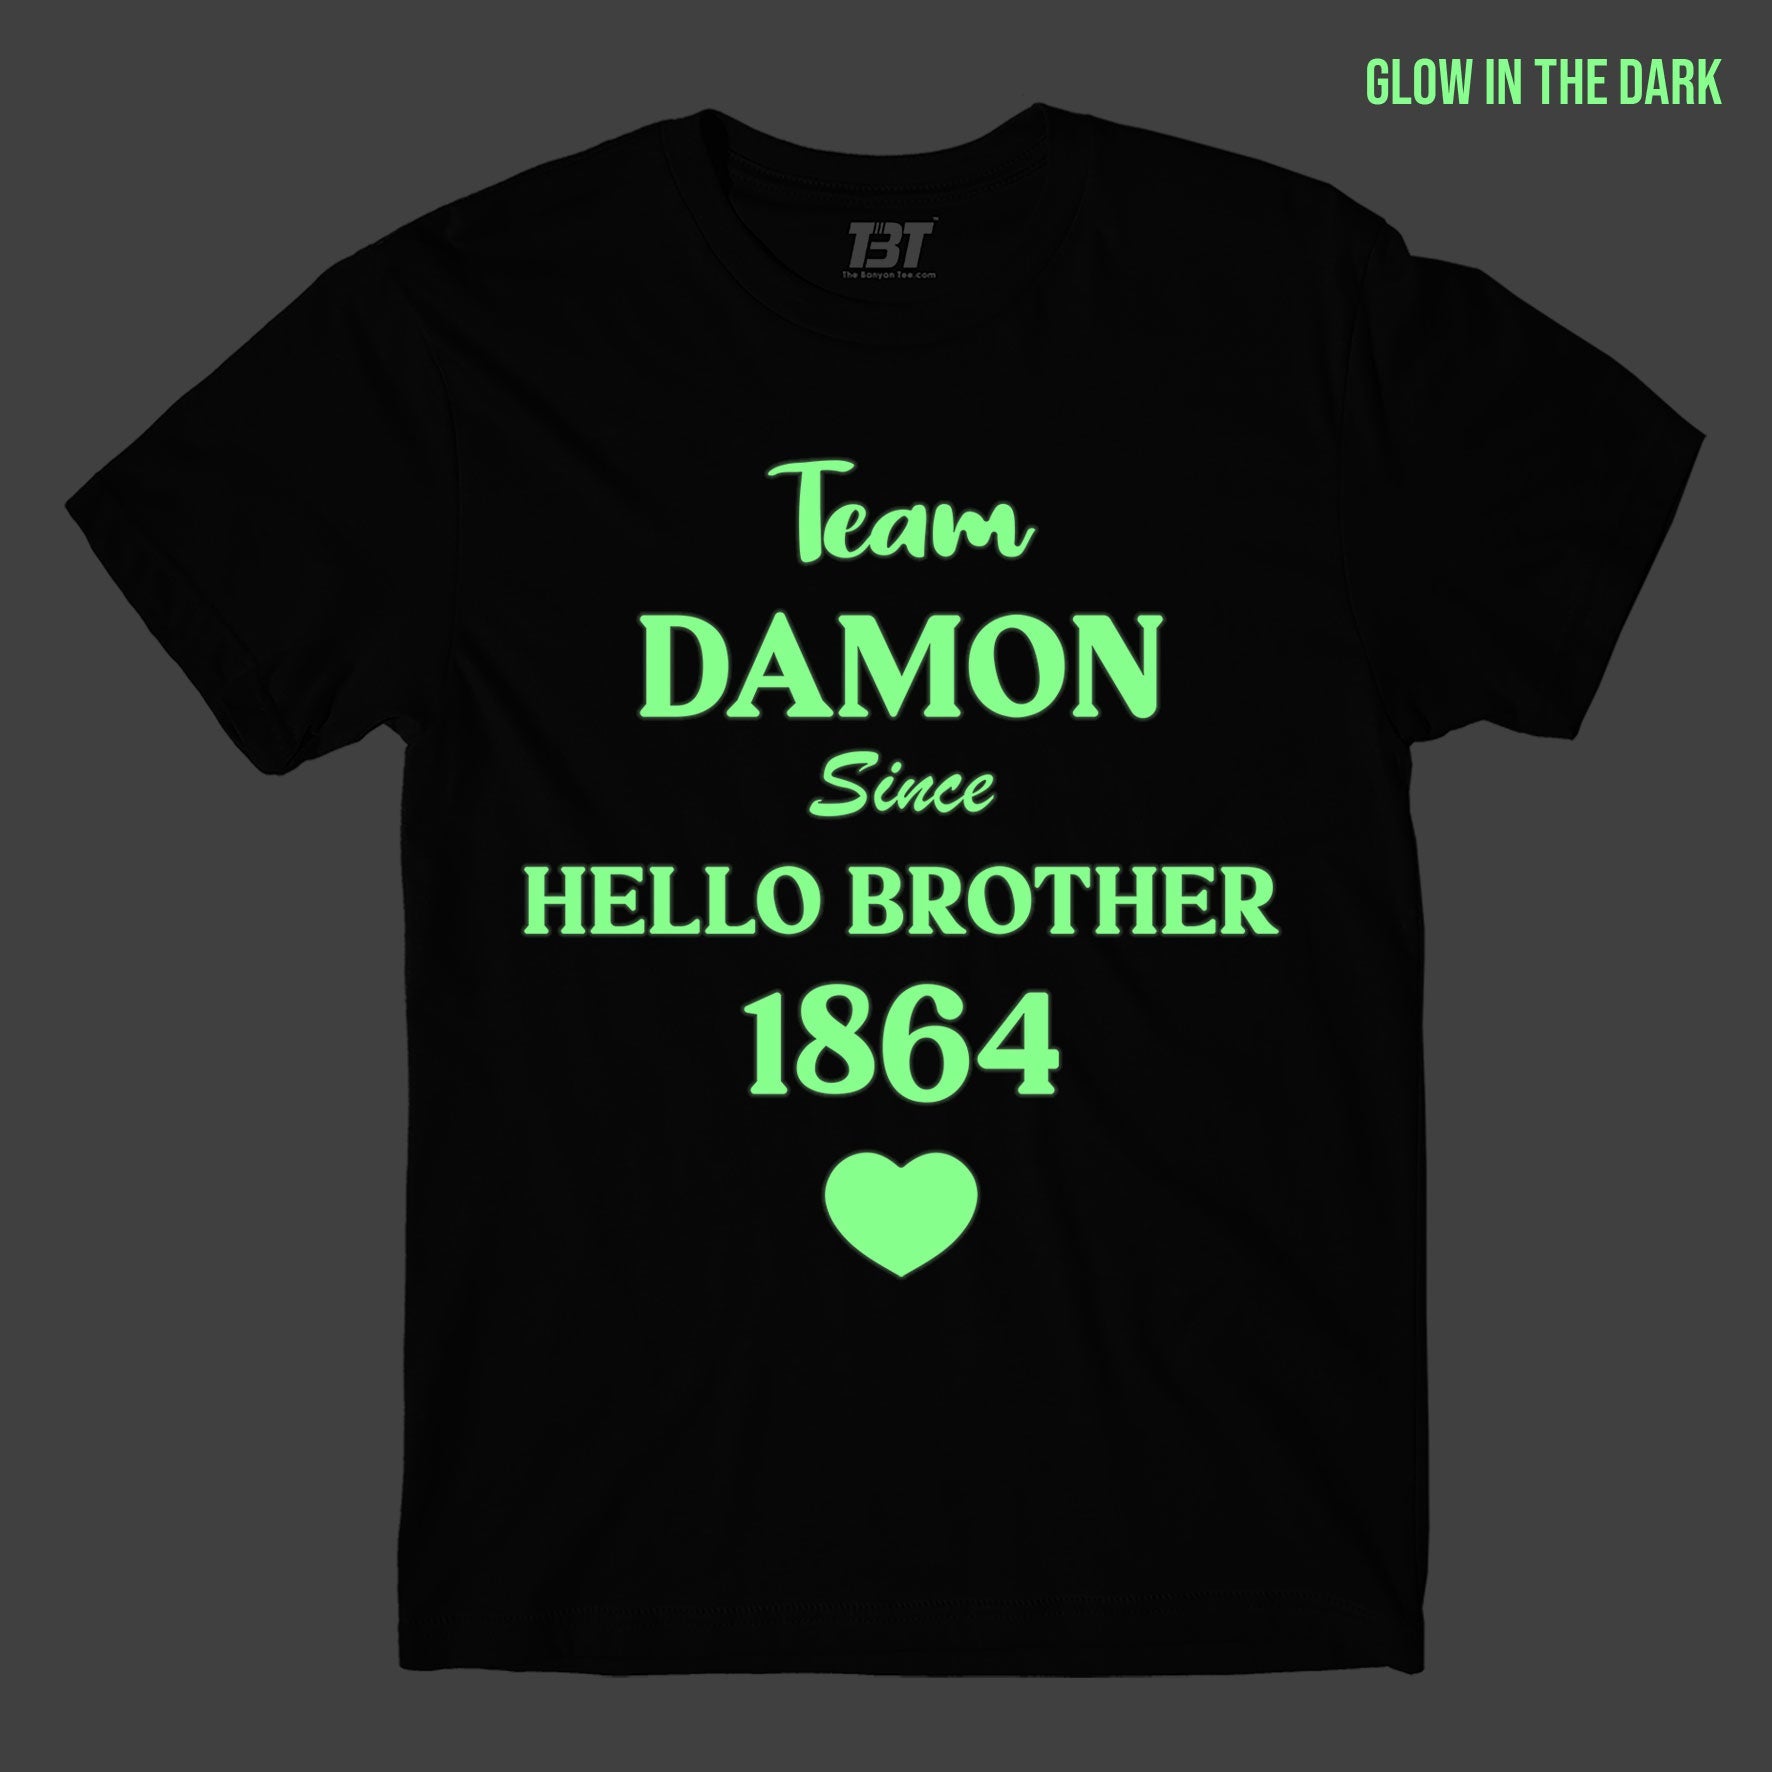 Glow In The Dark The Vampire Diaries T-shirt by The Banyan Tee